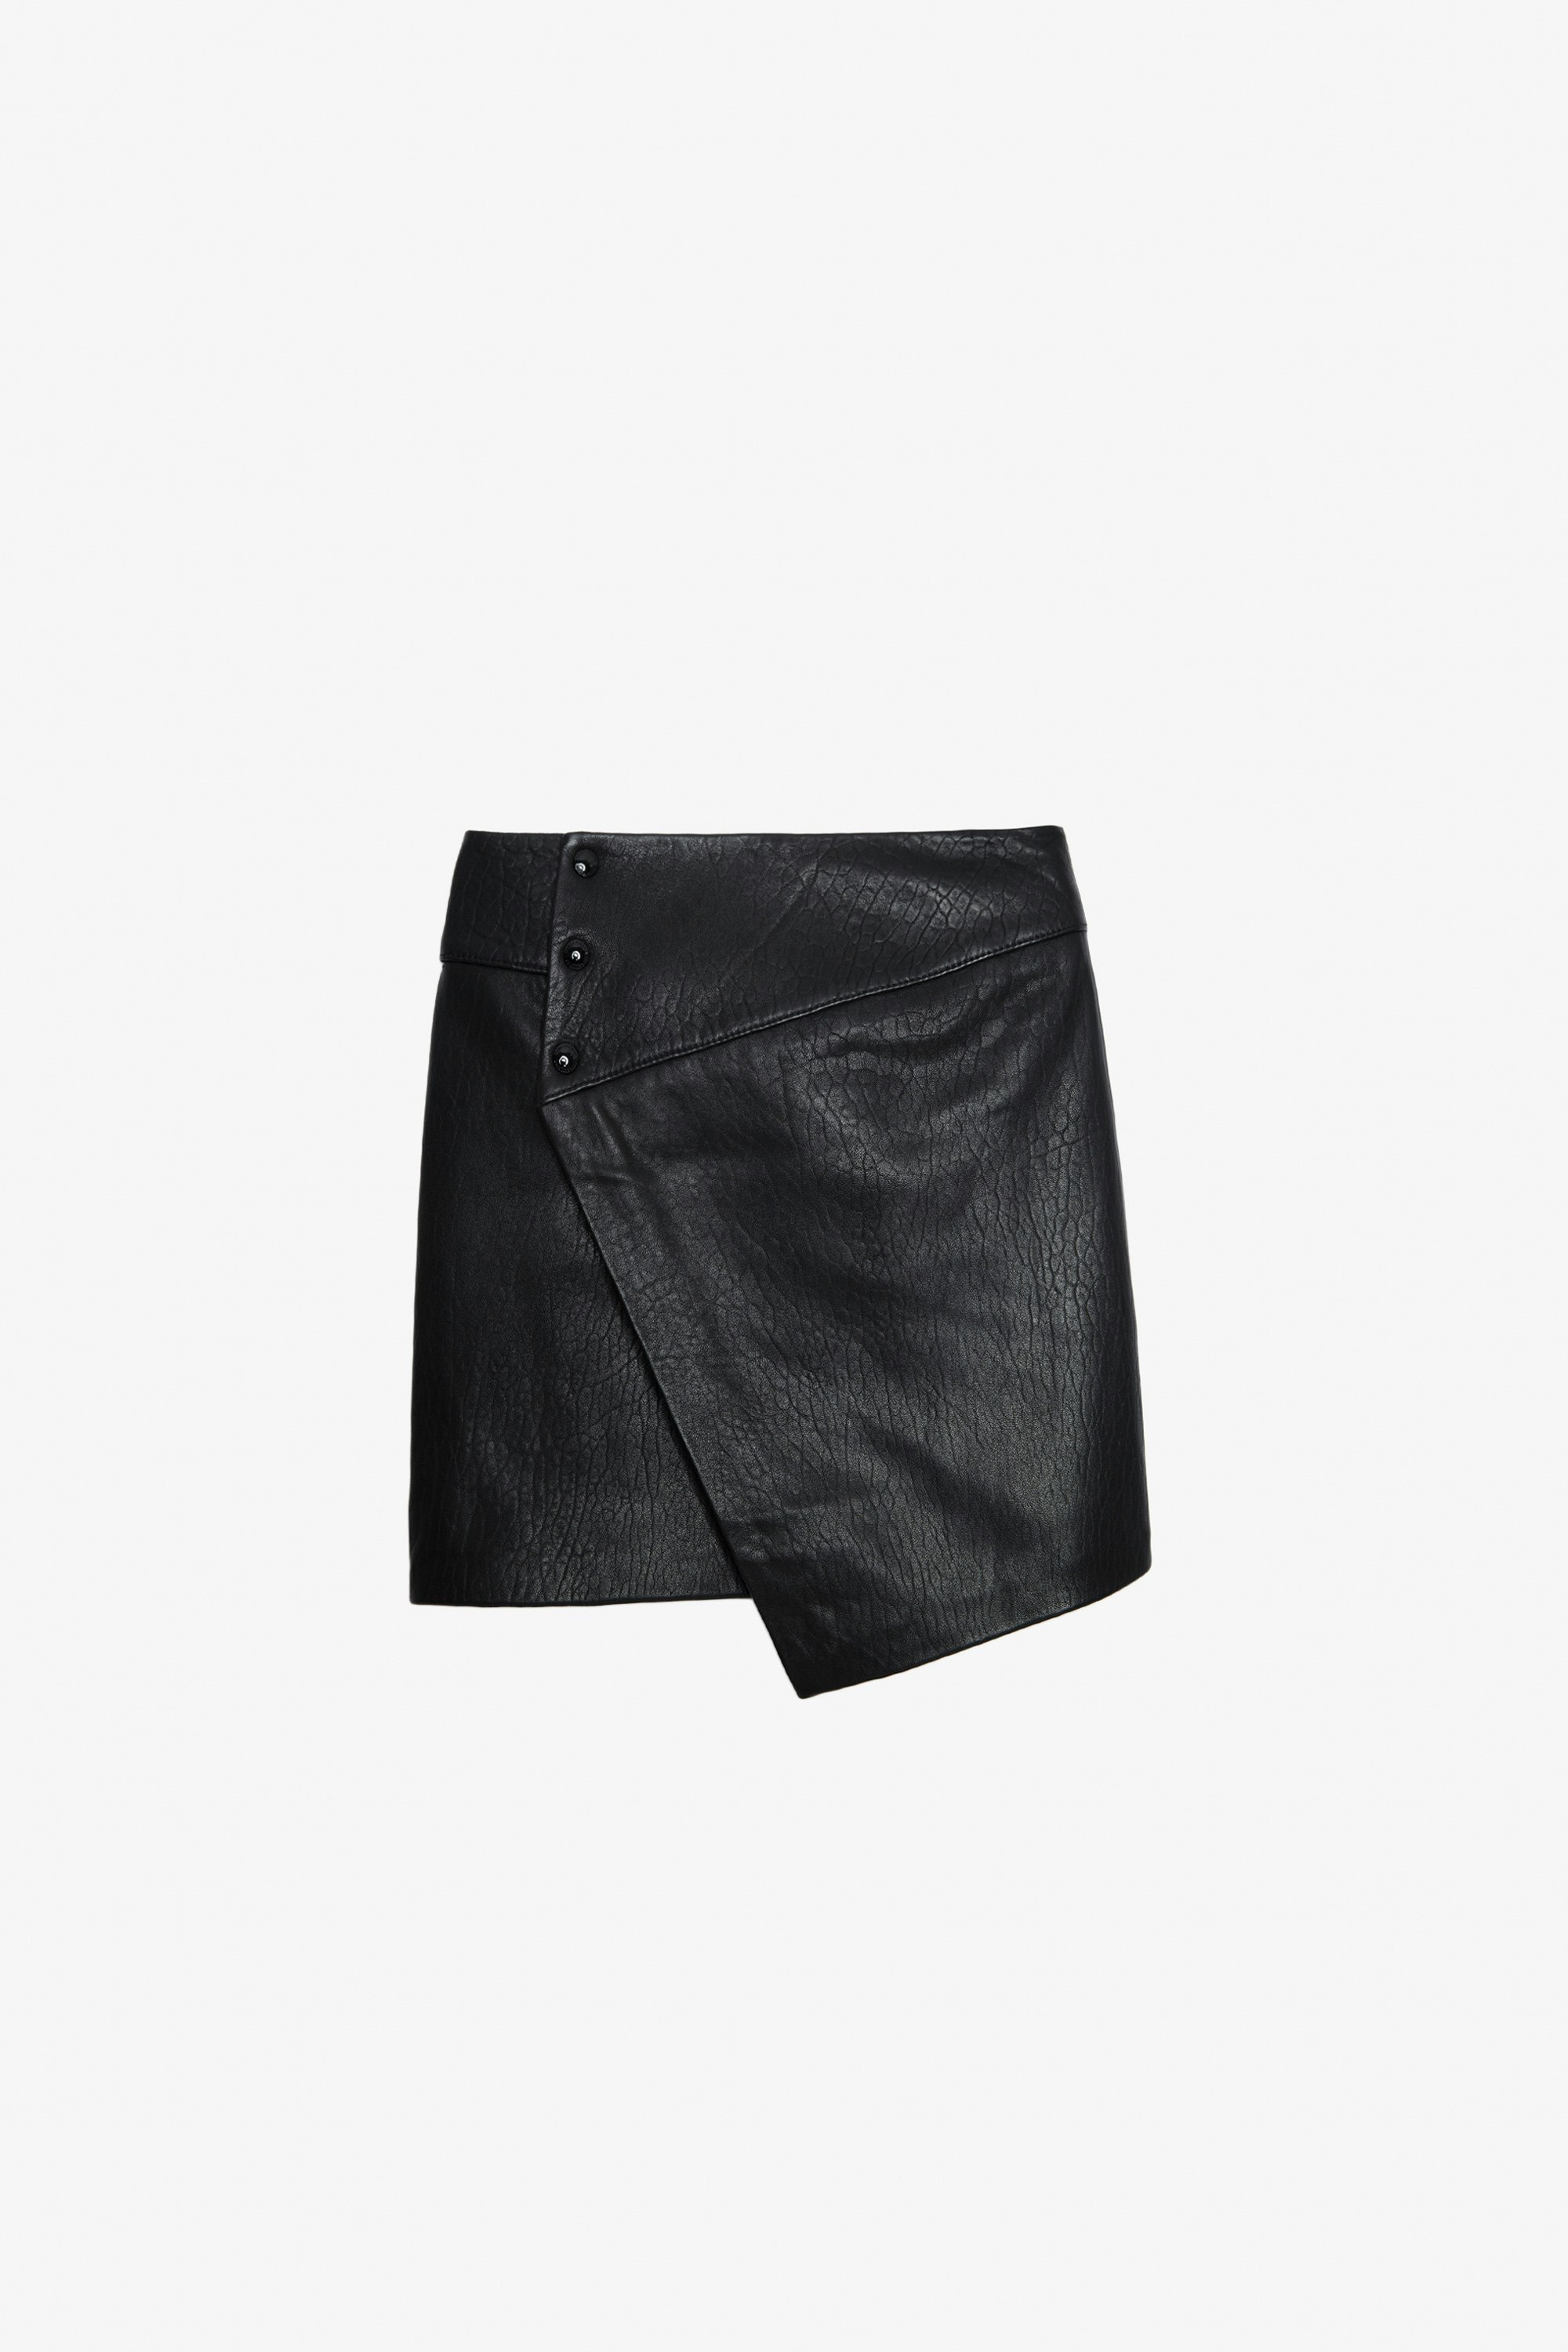 Junko Biker Leather Skirt - Women’s short leather wrap skirt with button fastening.